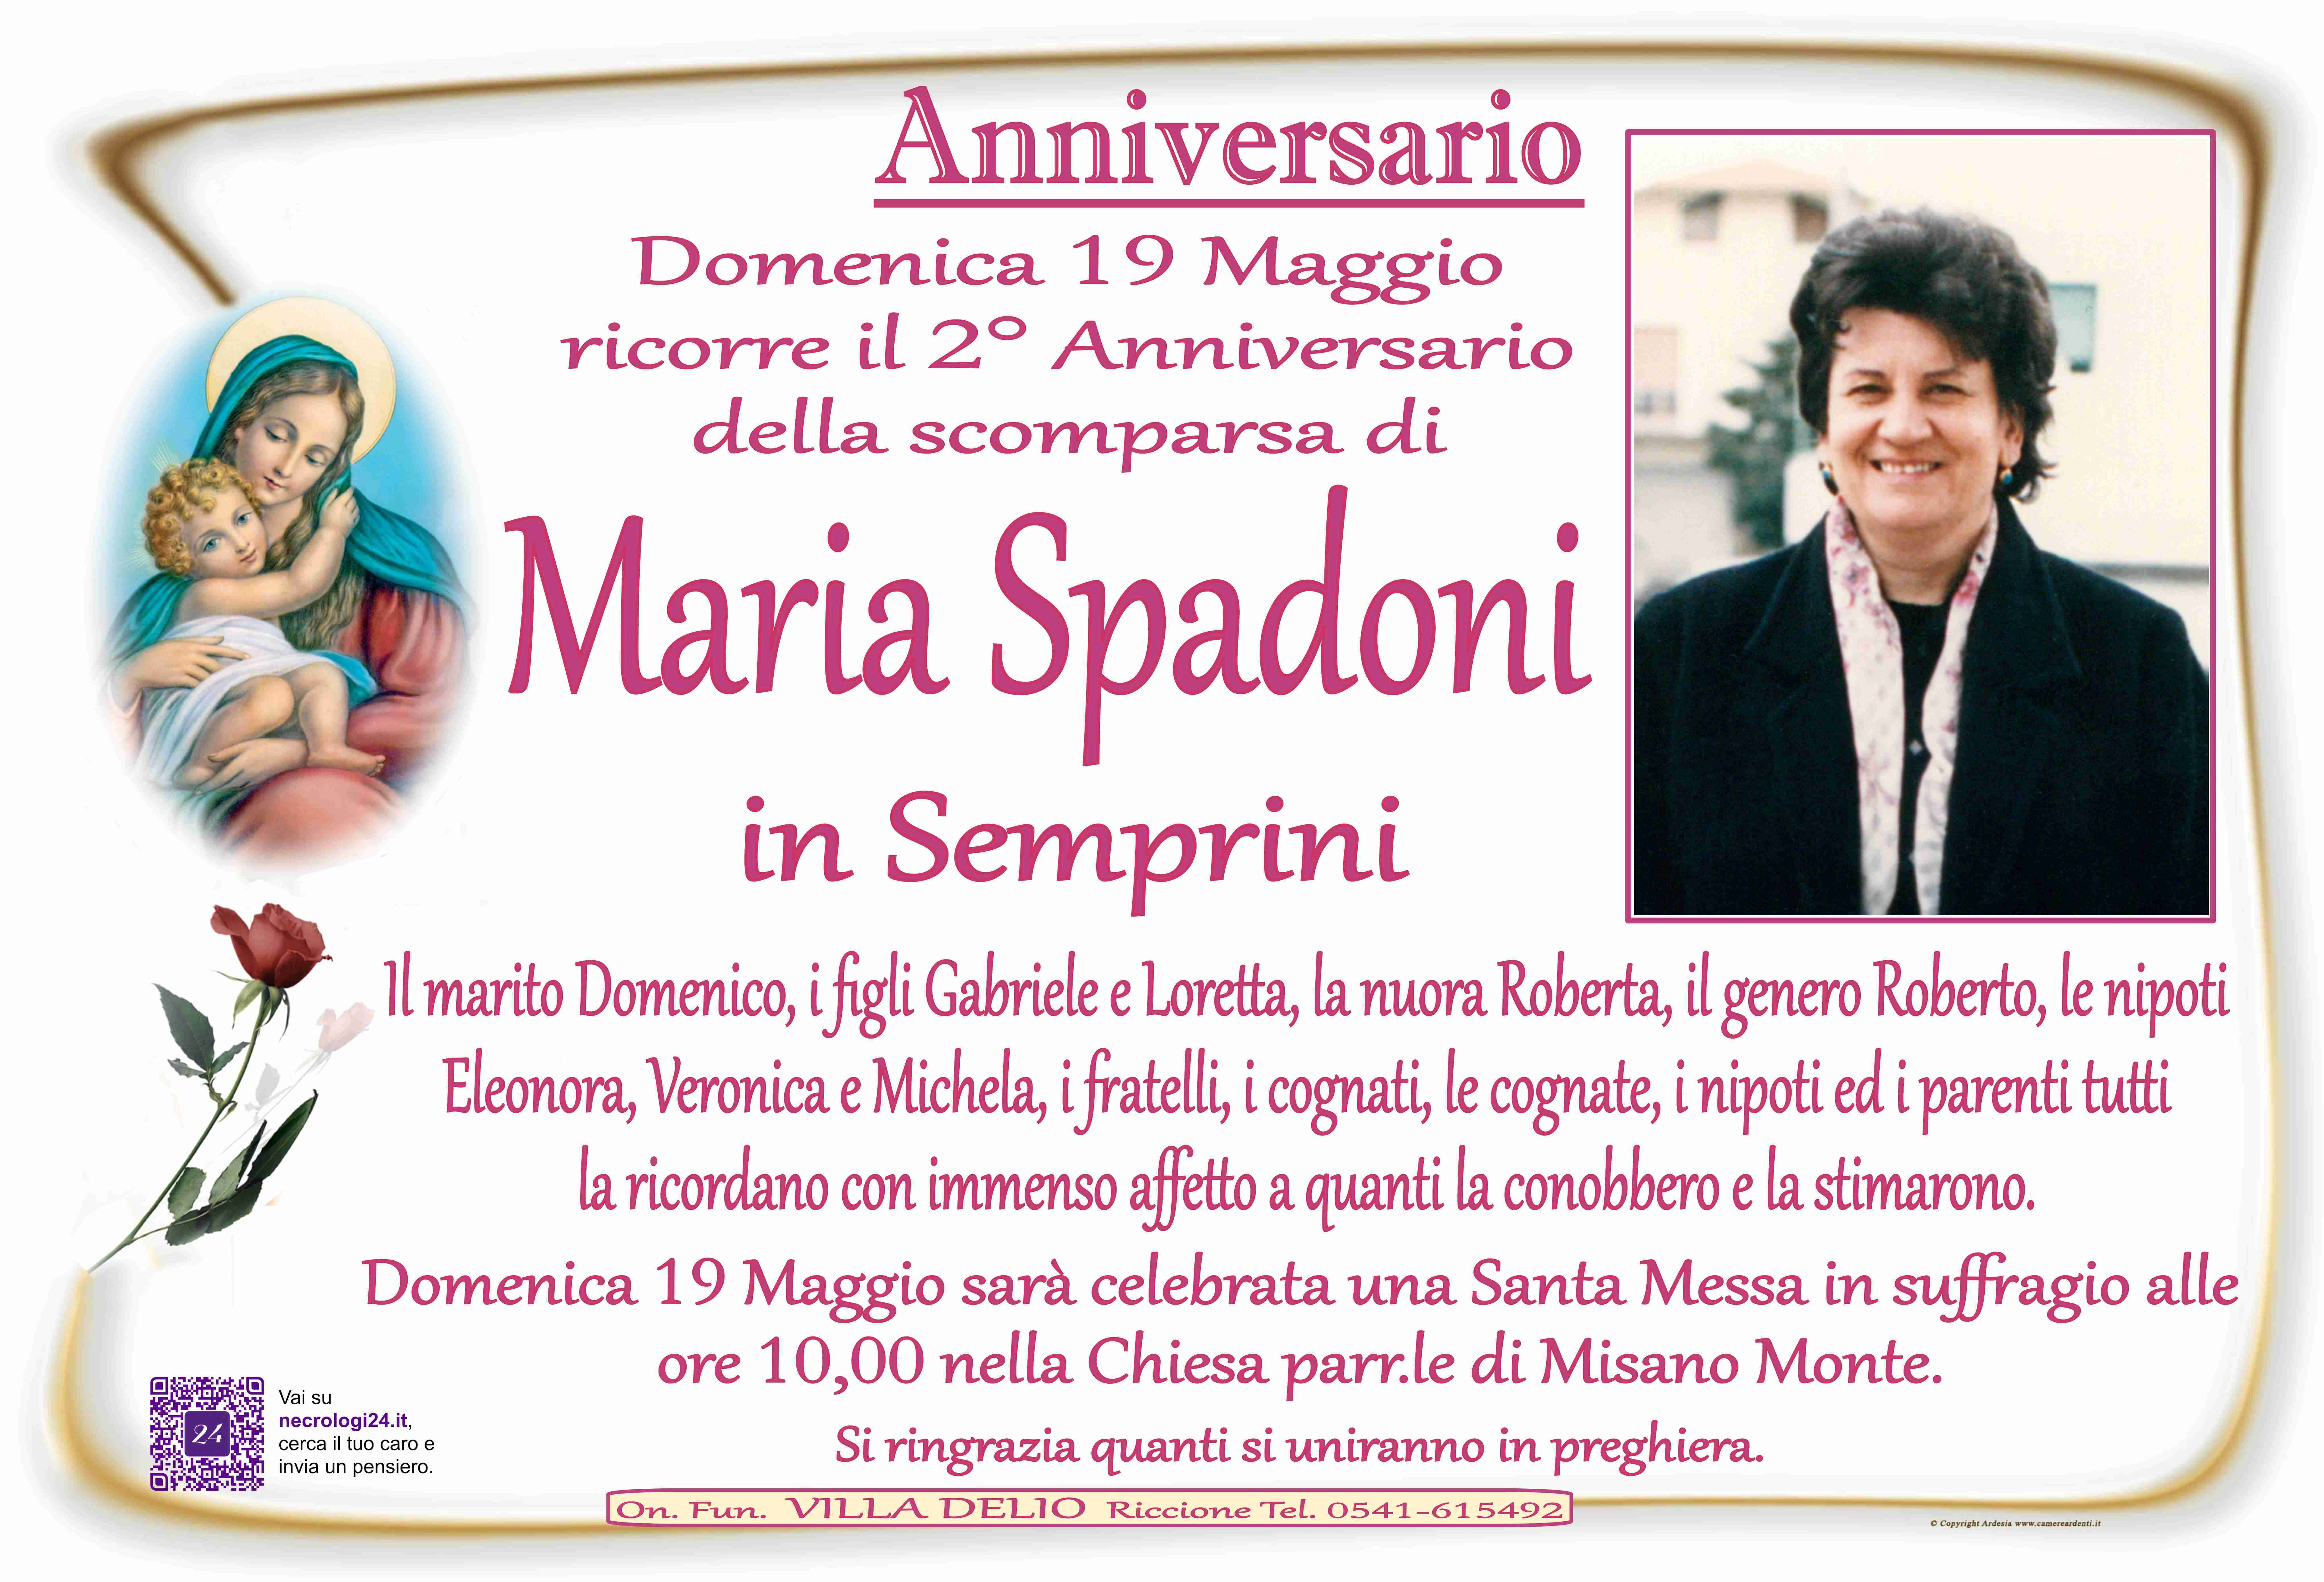 Maria Spadoni in Semprini